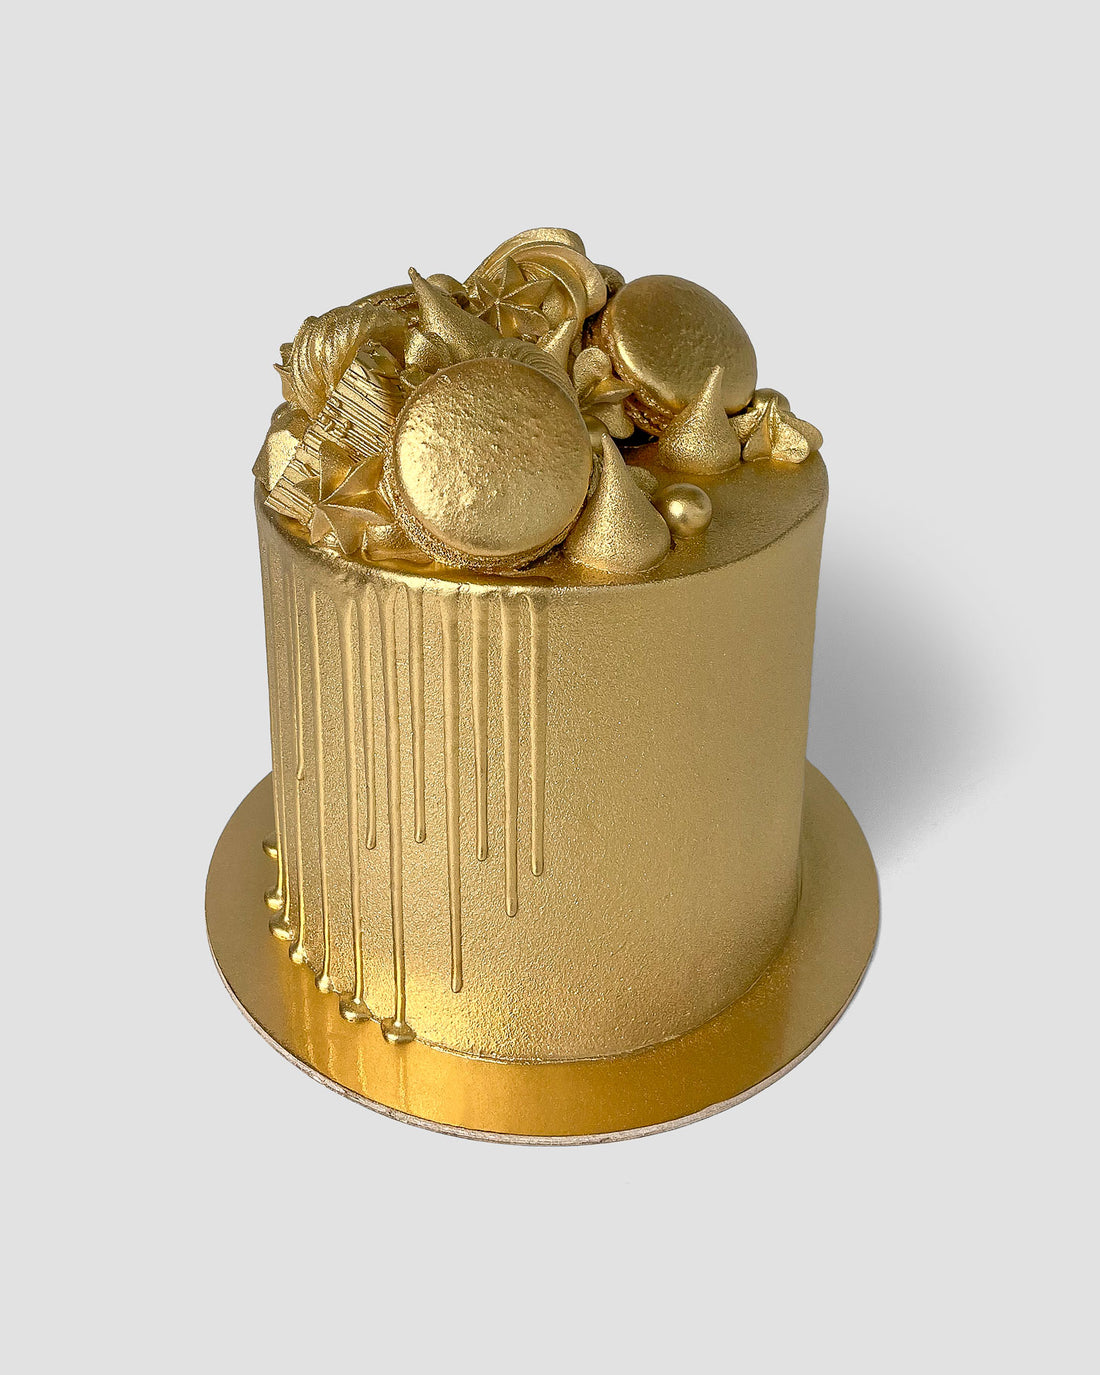 Brilliant Gold Luster Dust - Tastycrafts